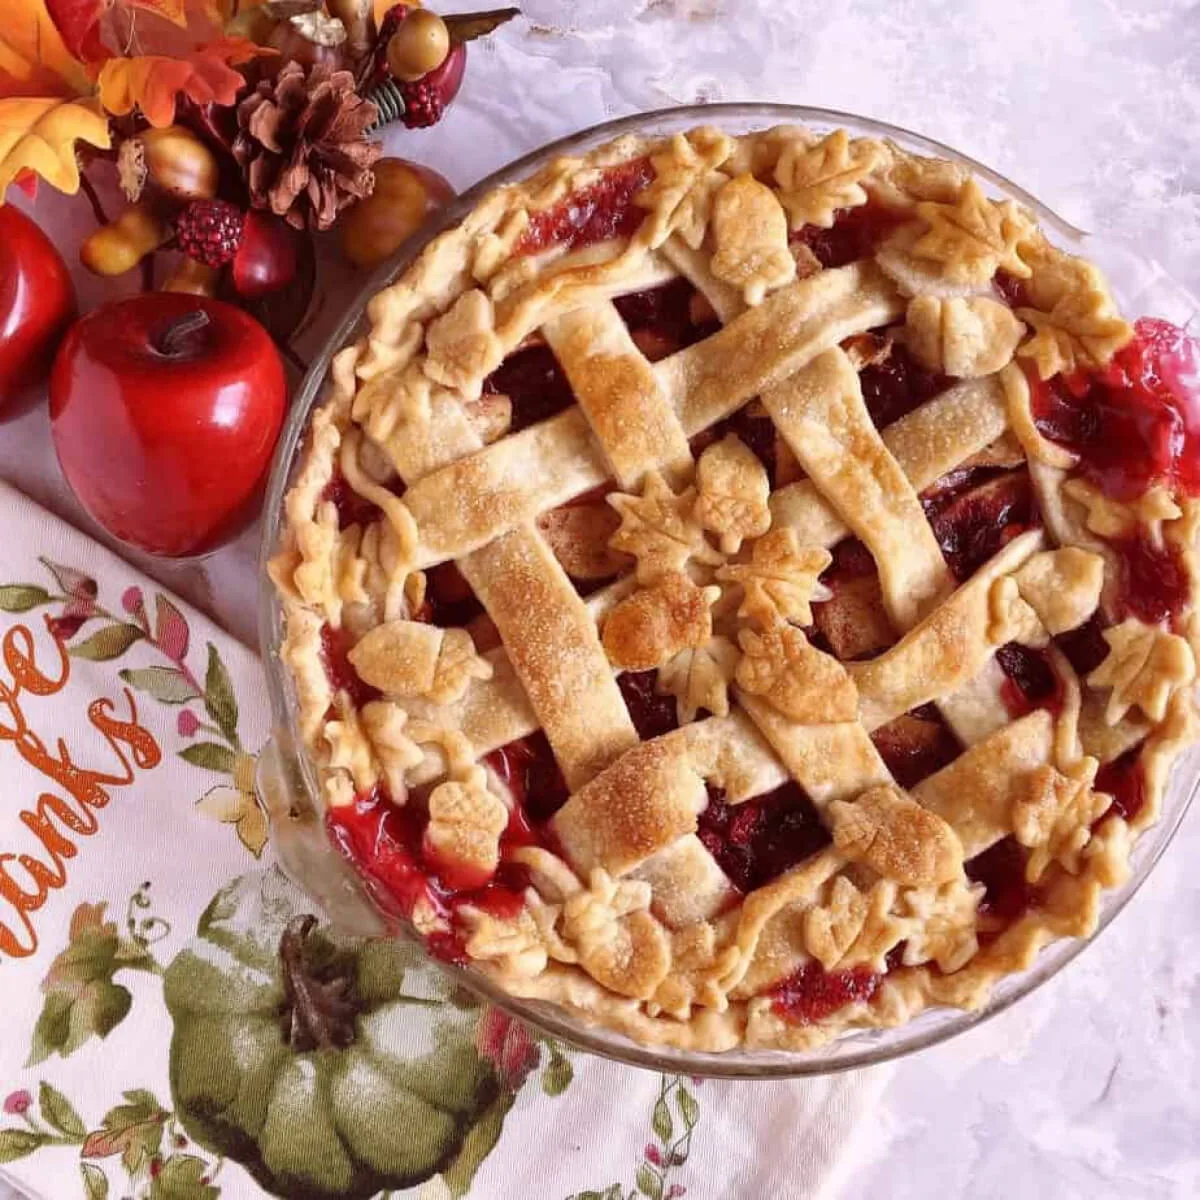 Cranberry Apple Pie with a beautiful decorative crust